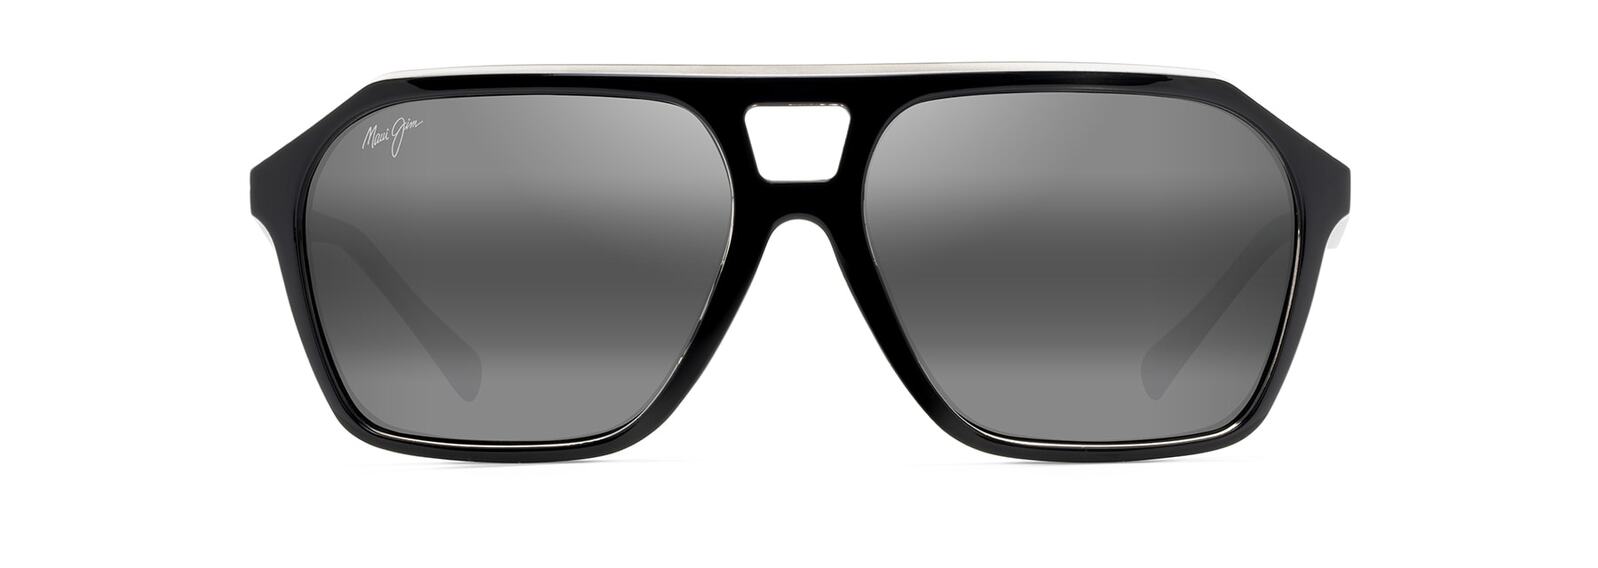 Maui Jim 880-02 Wedges Black Gloss Frame Crystal Natural Grey Glass Lens Sunglasses